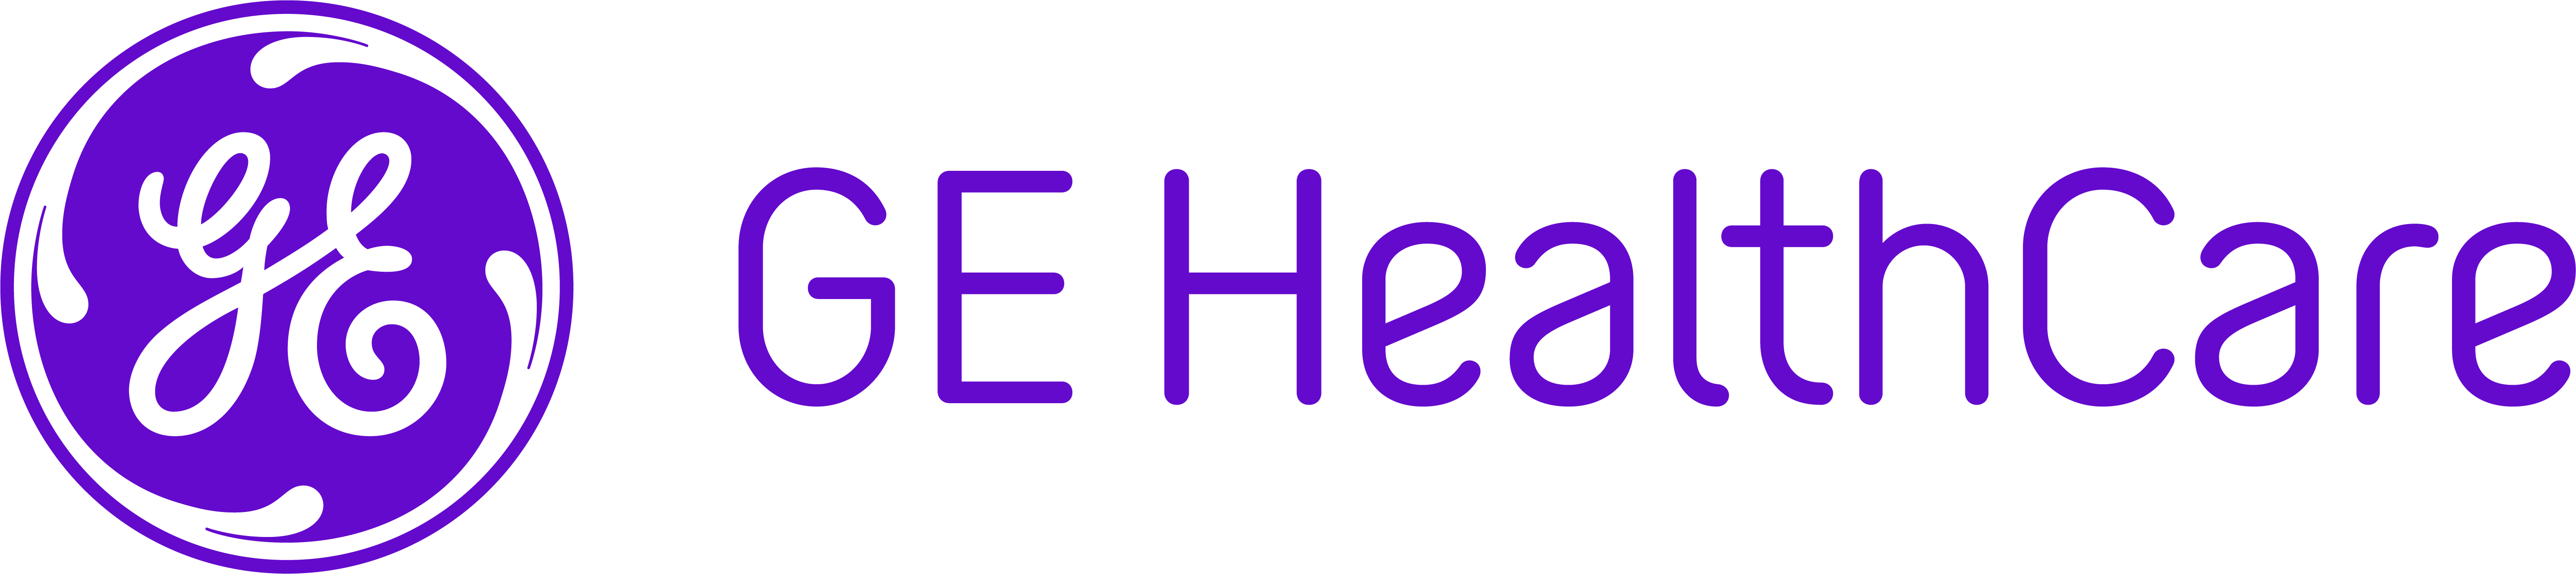 GE Health logo